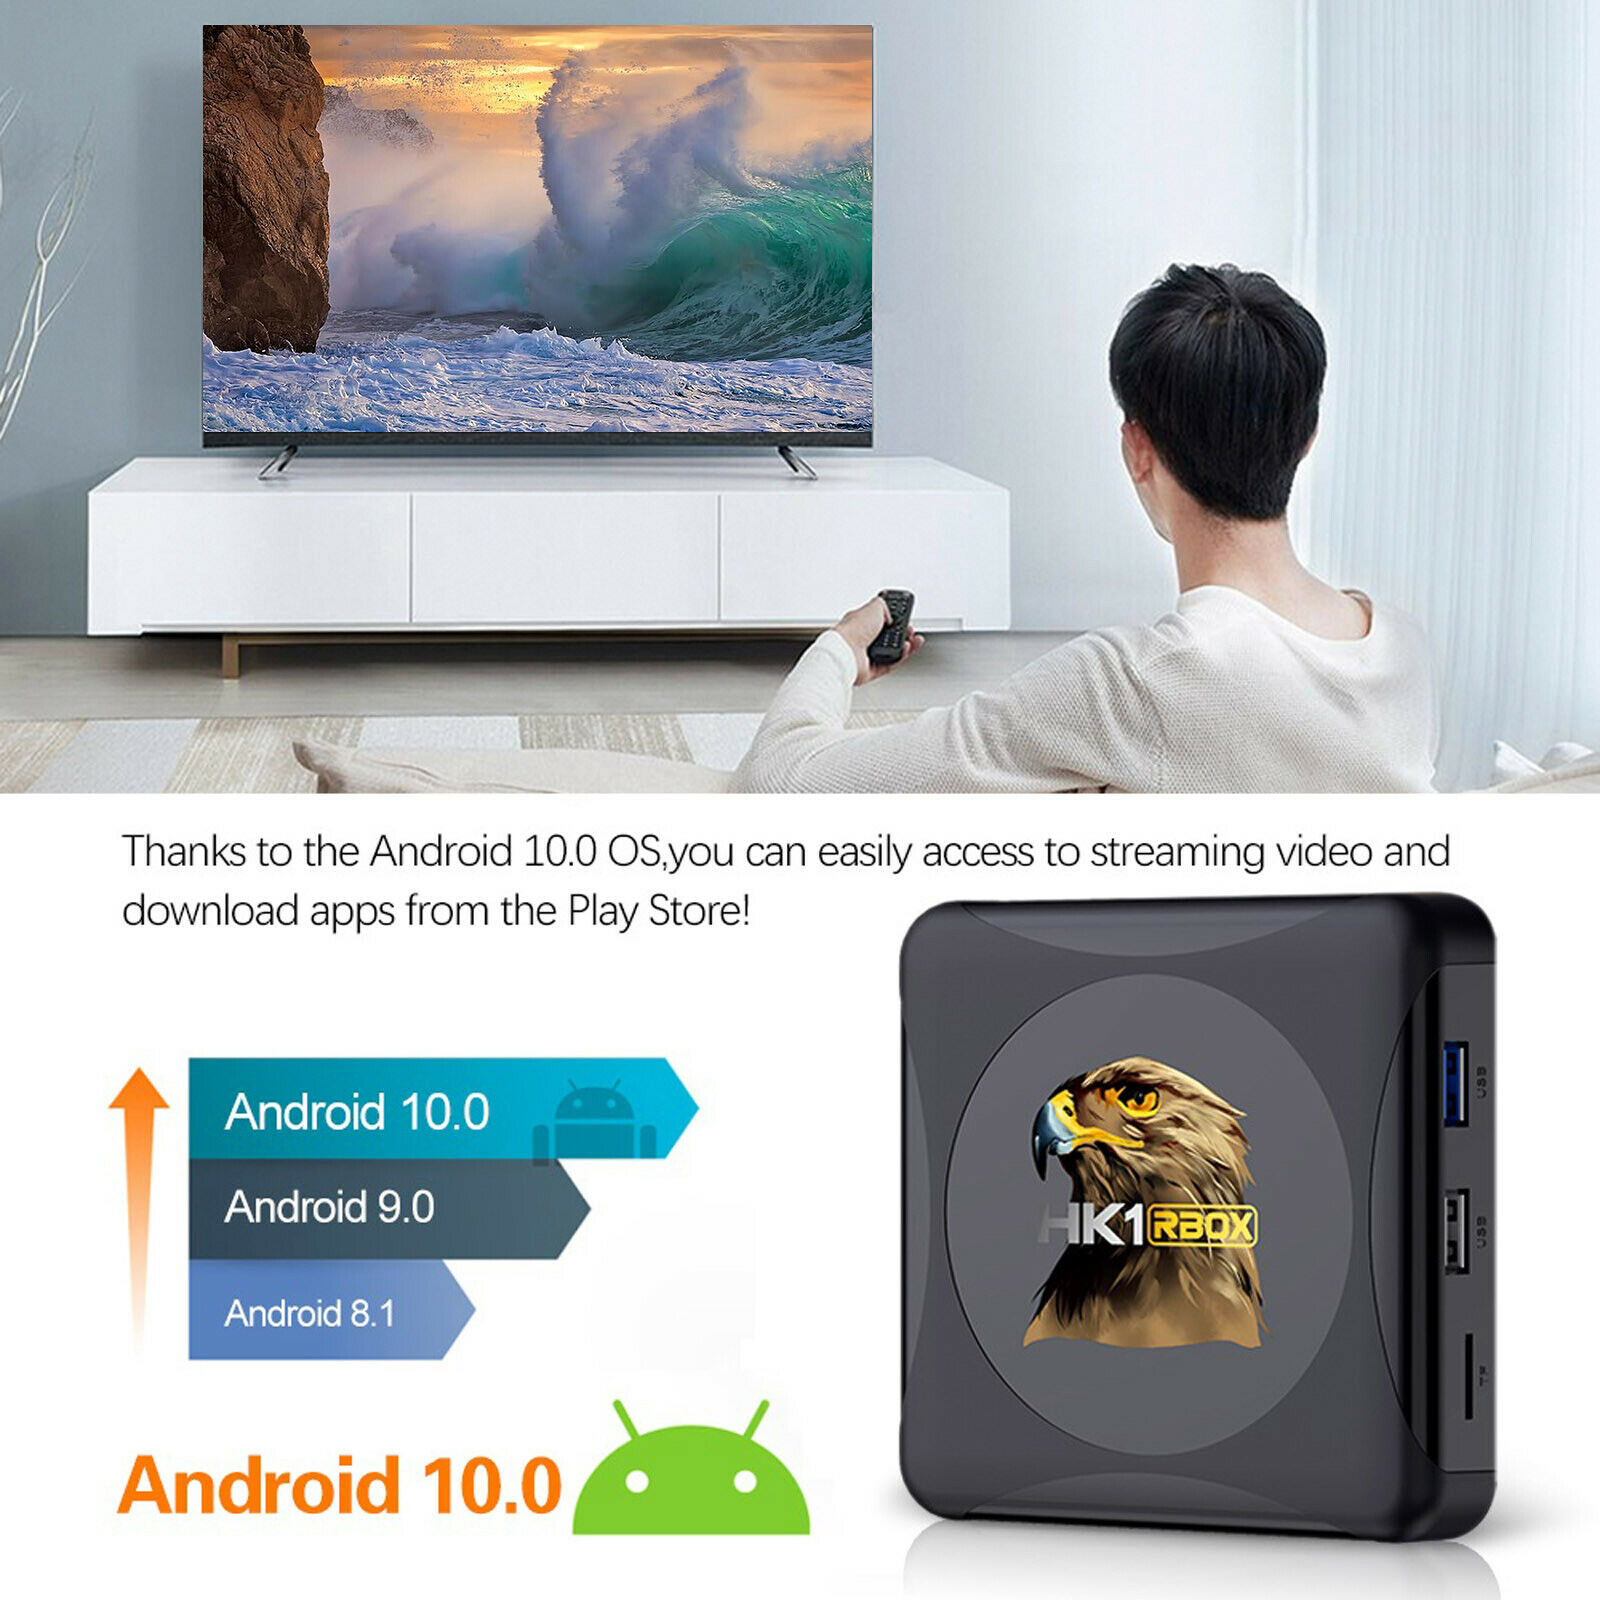 Boîtier Smart TV HK1 R1, Android 10.0, 4 go 64 go, Rockchip RK3318